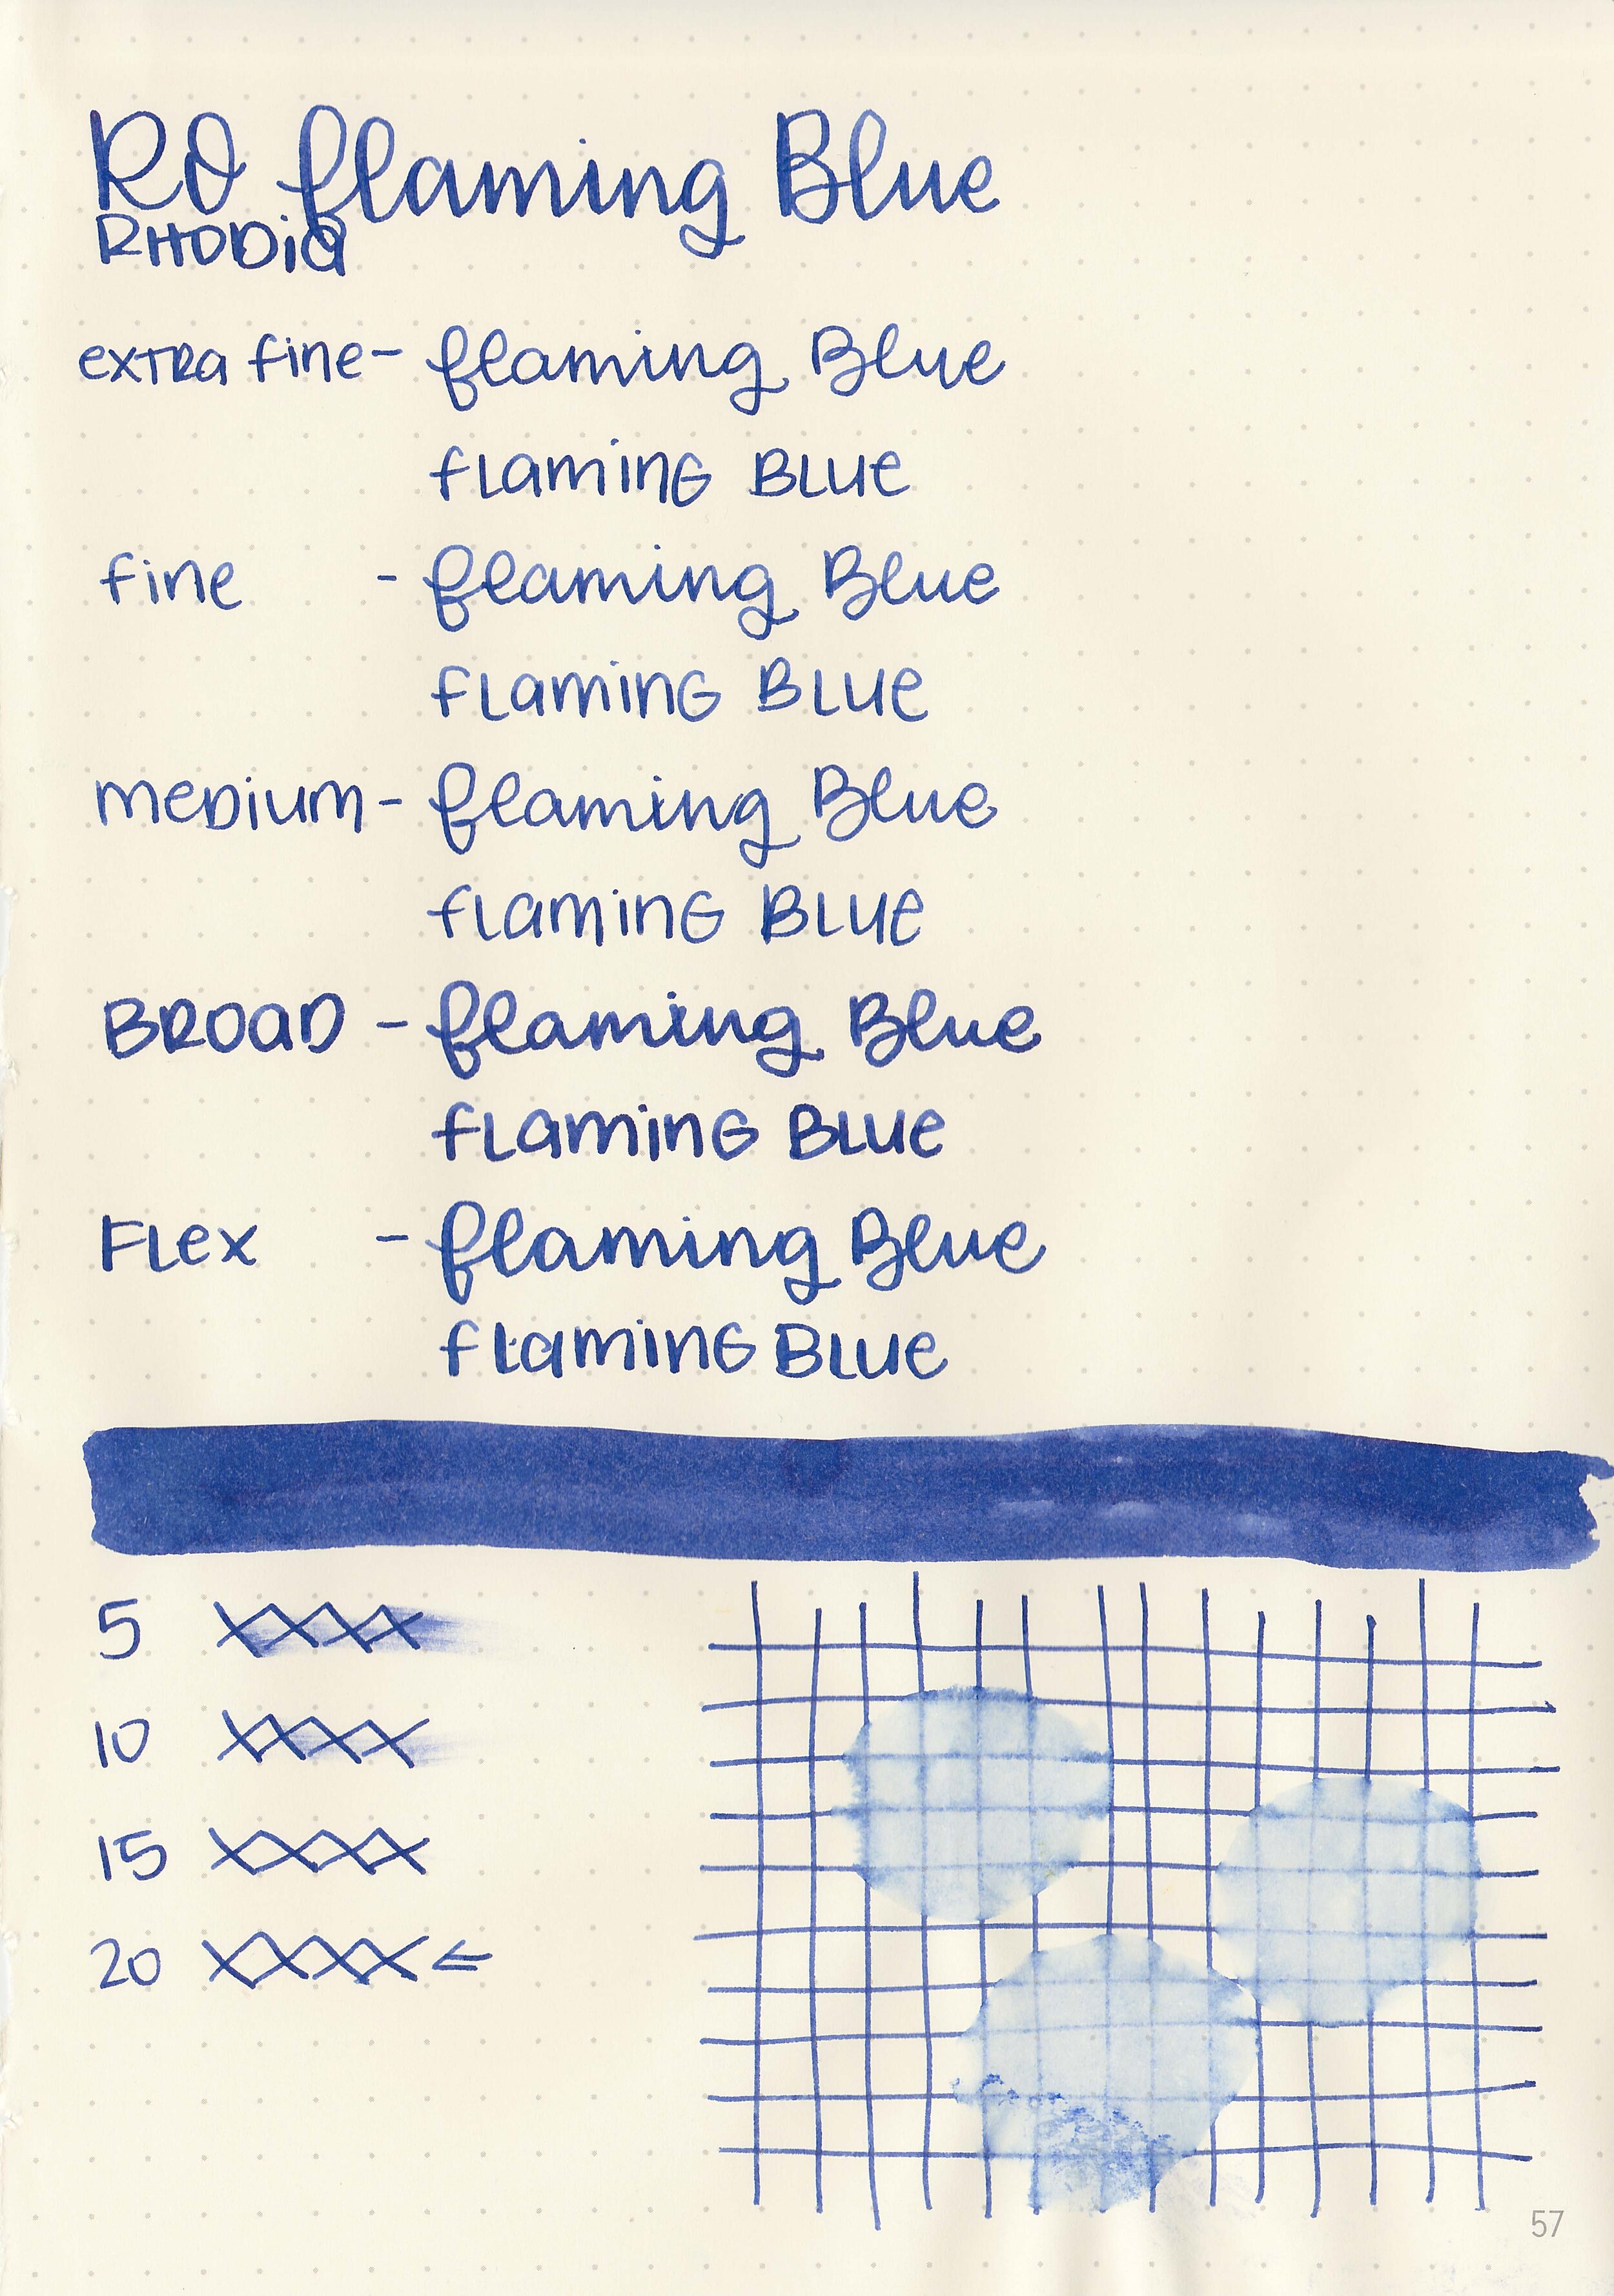 ro-flaming-blue-5.jpg